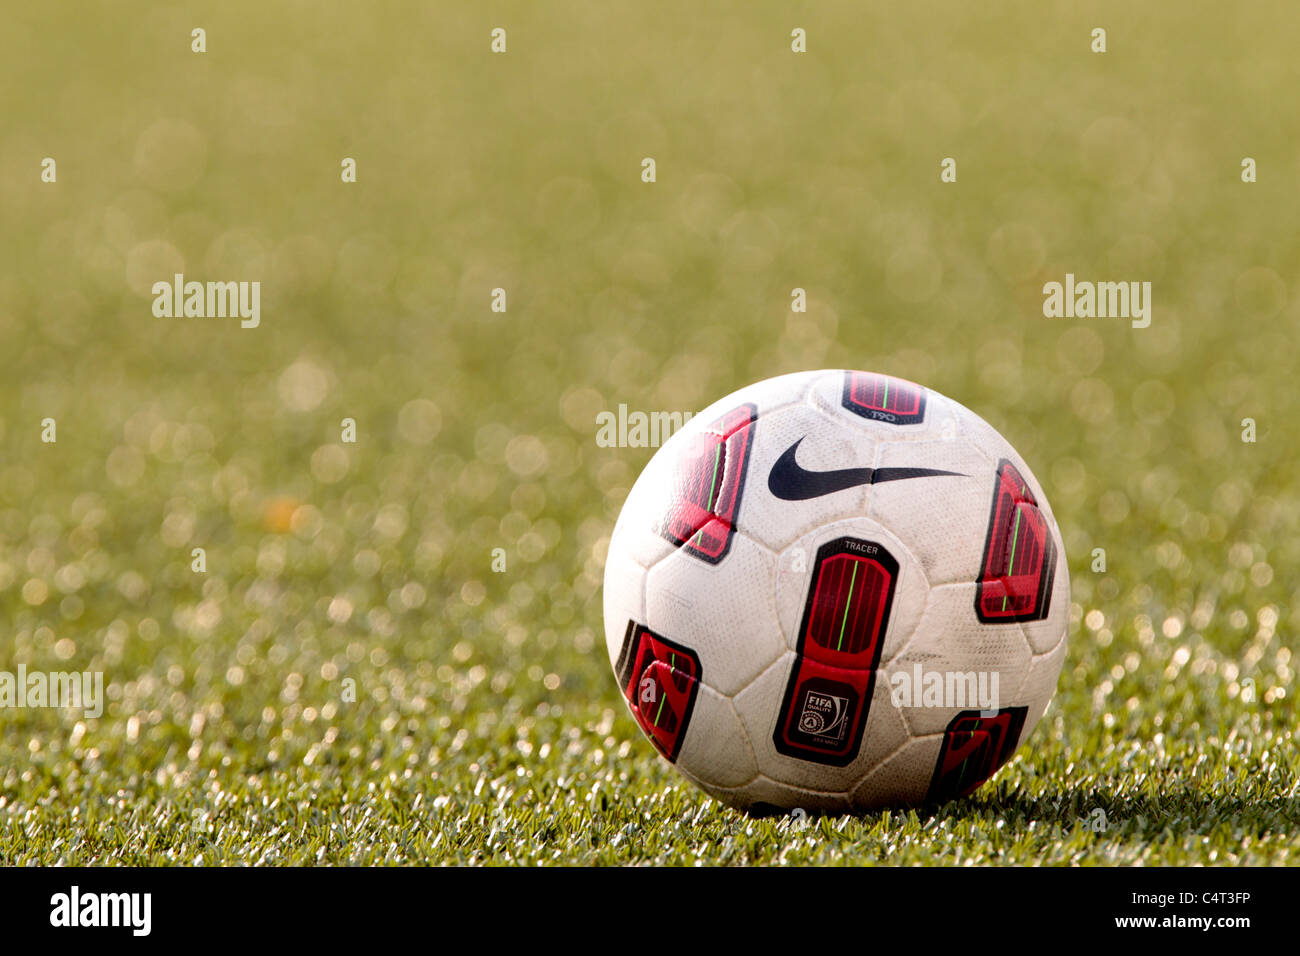 22.06.2011, the Nike T90 Catalyst Fußballkugel, Offizieller Spielball für die 23. Canon Lion City Cup, Jalan Besar Stadium, Singapur. Stockfoto